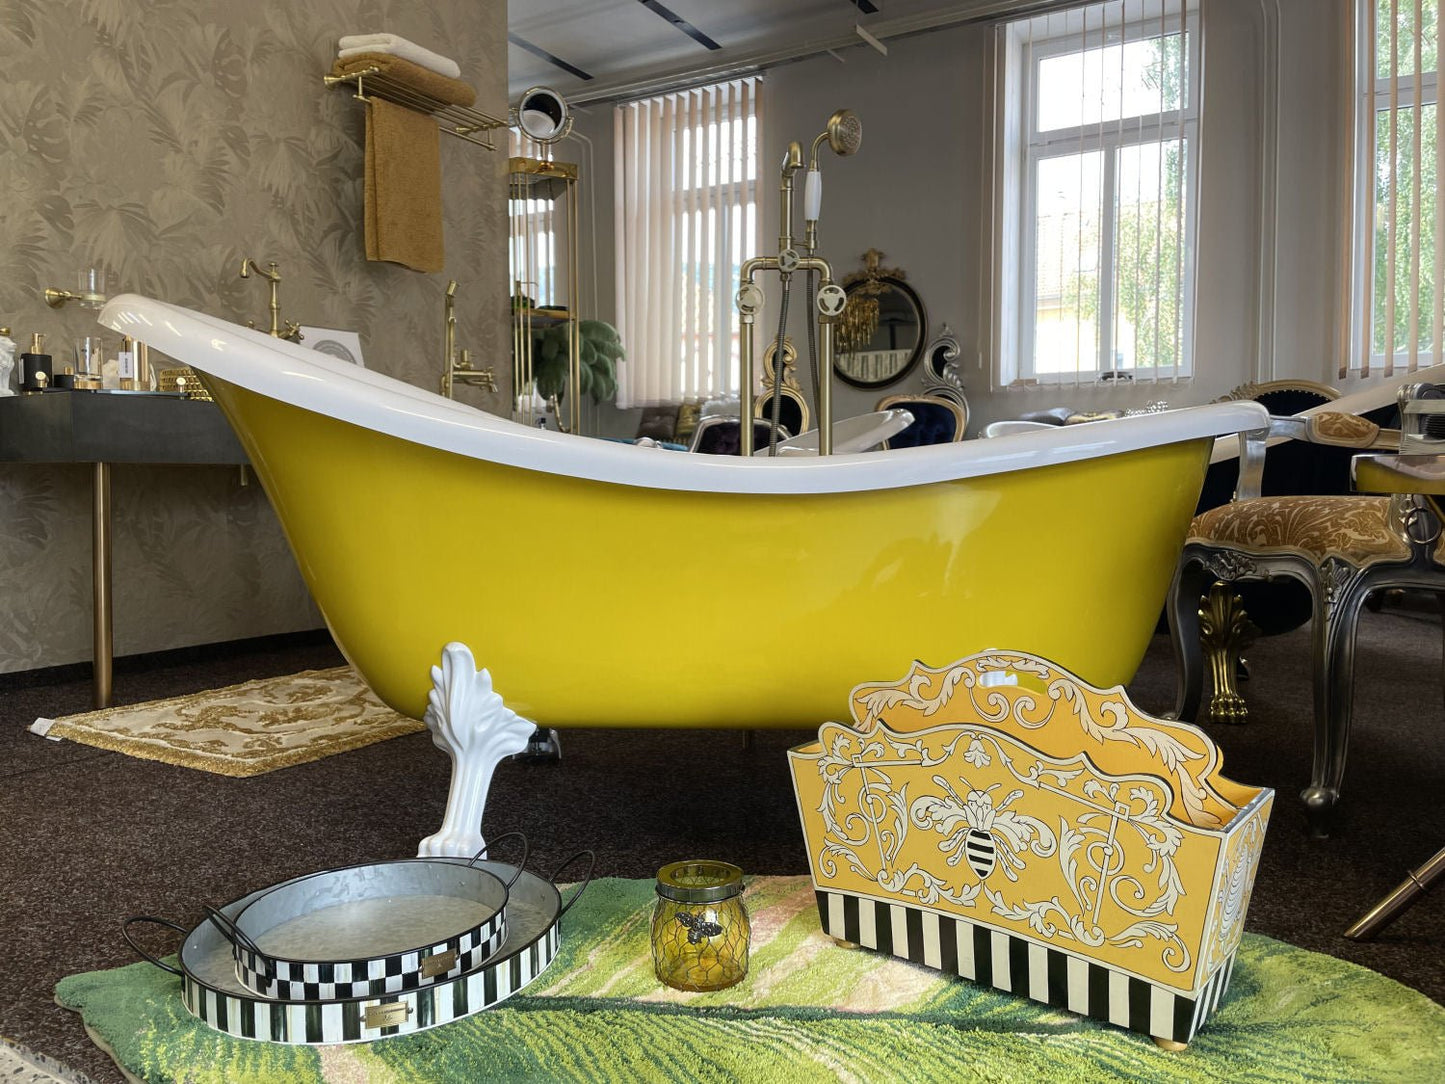 Freestanding Antique Brass Industrial Bathtub Faucet - |VESIMI Design|